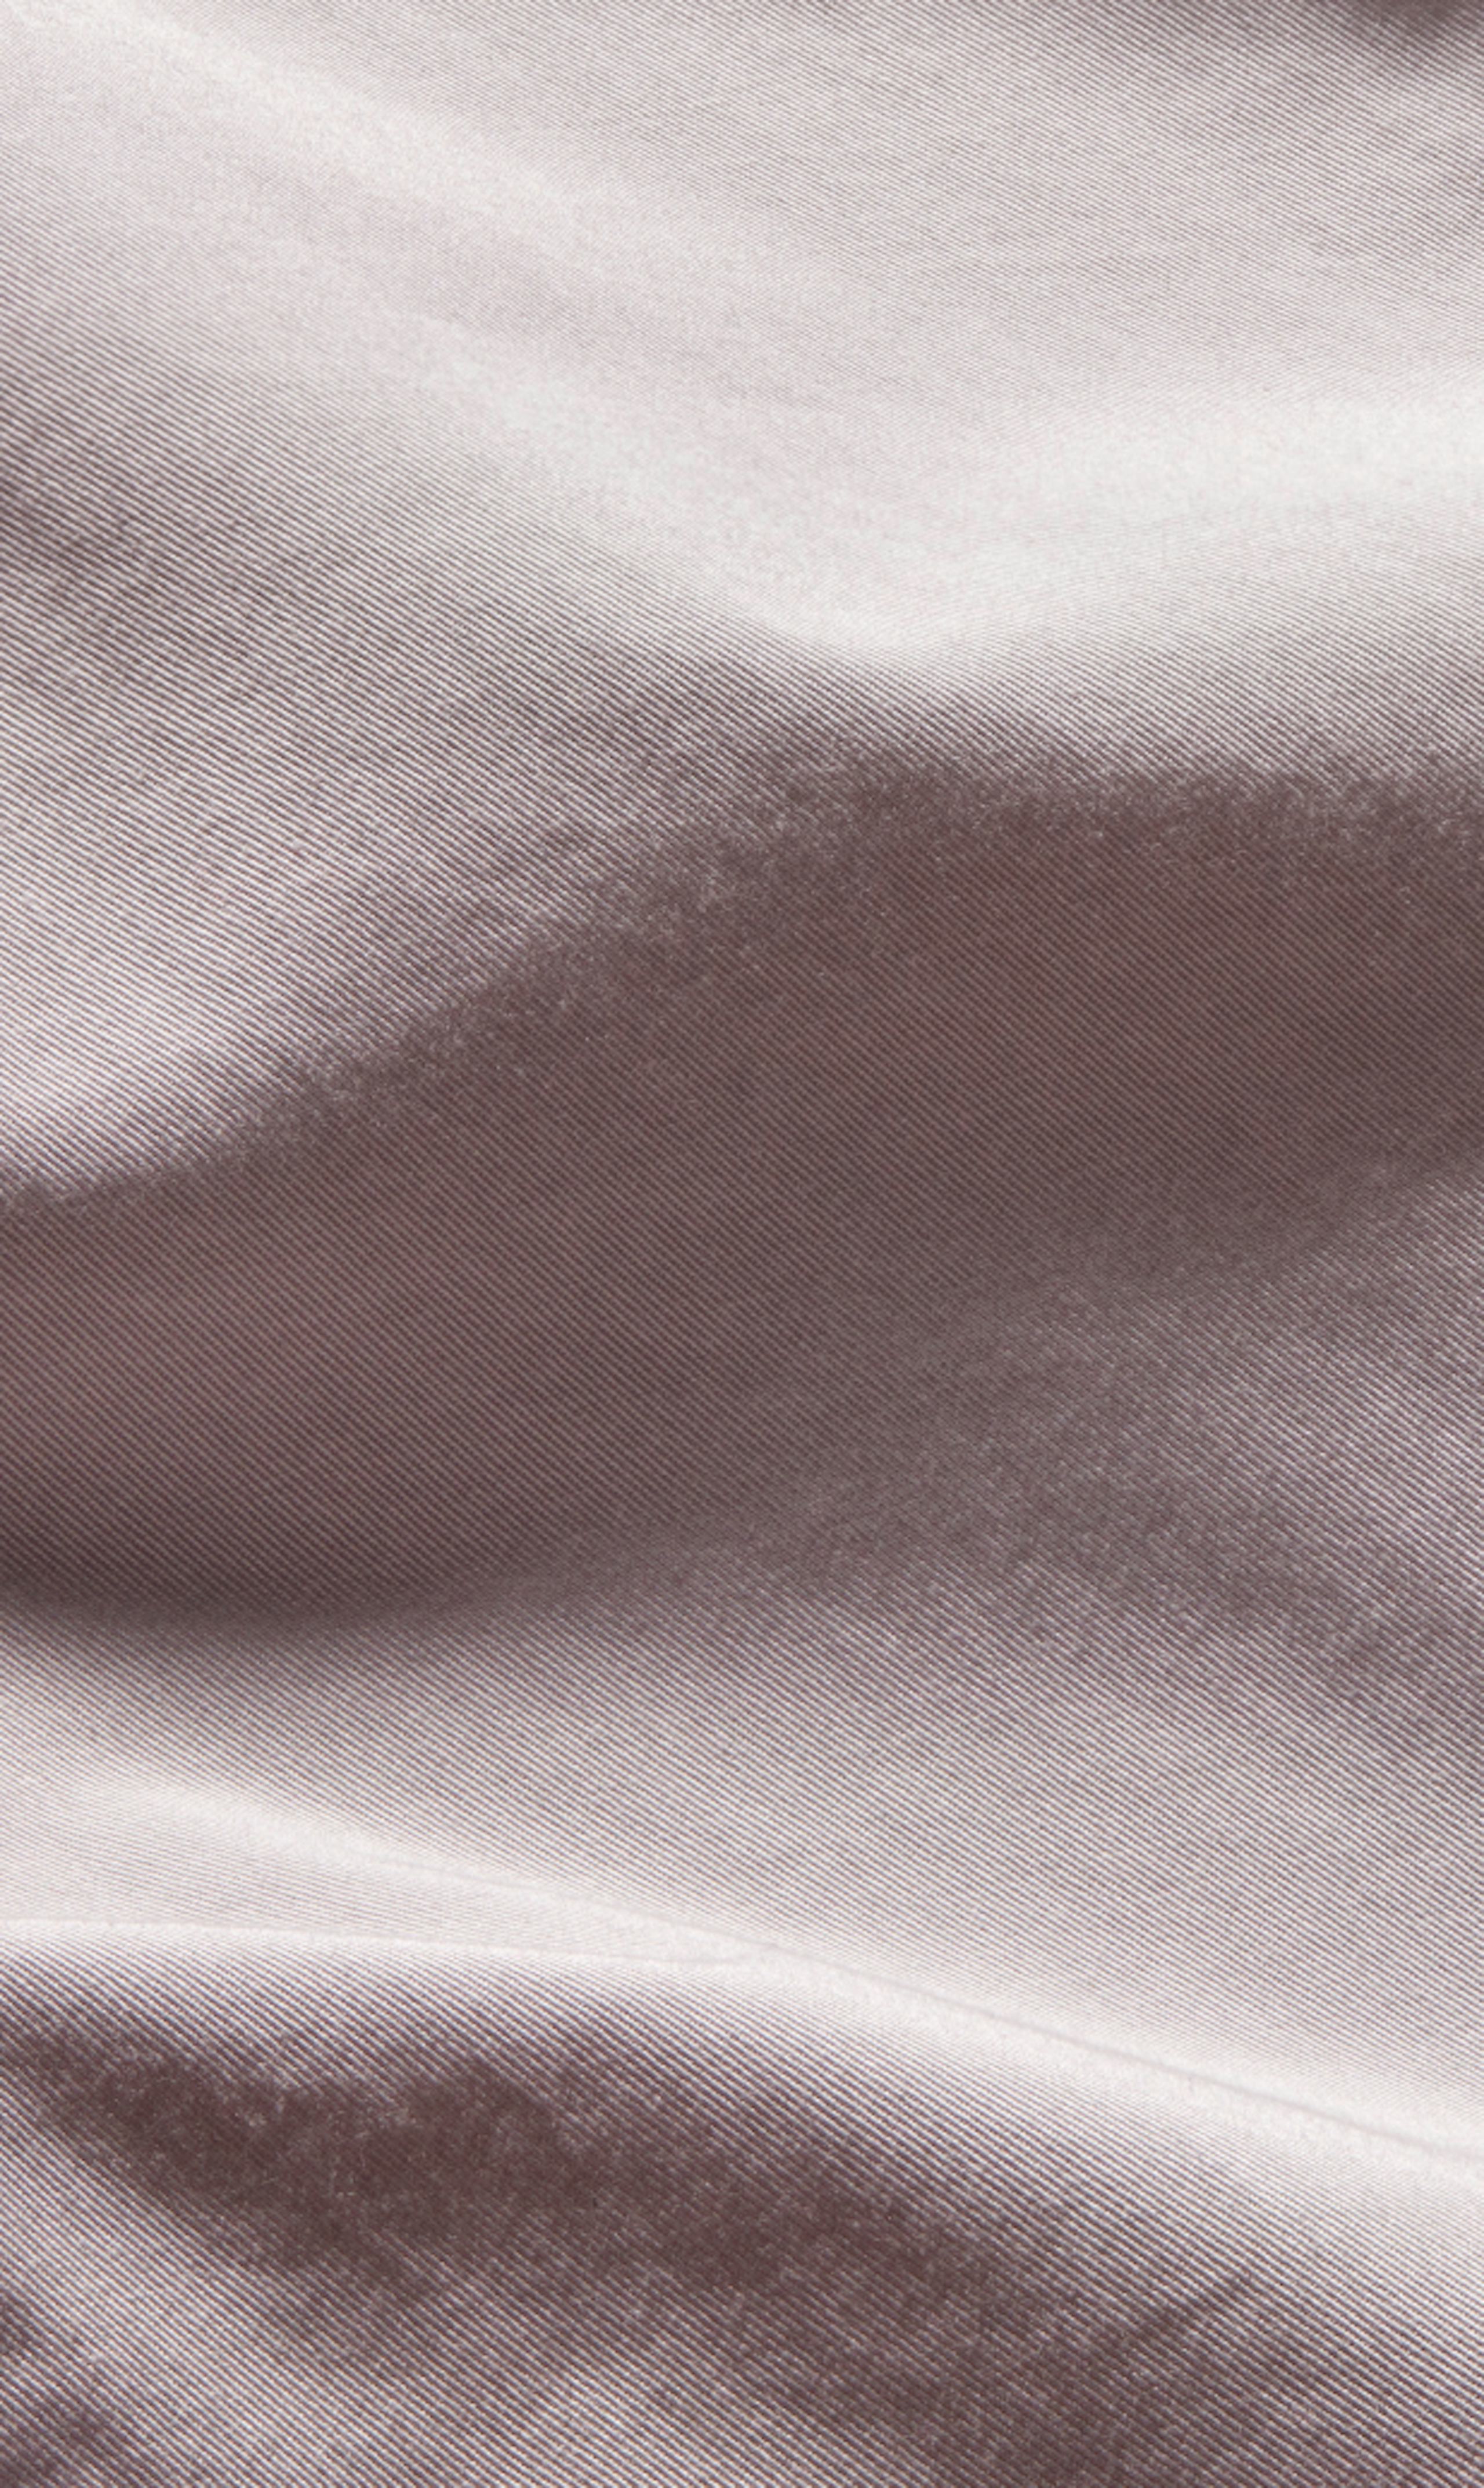 image of a seasonal fabric swatch